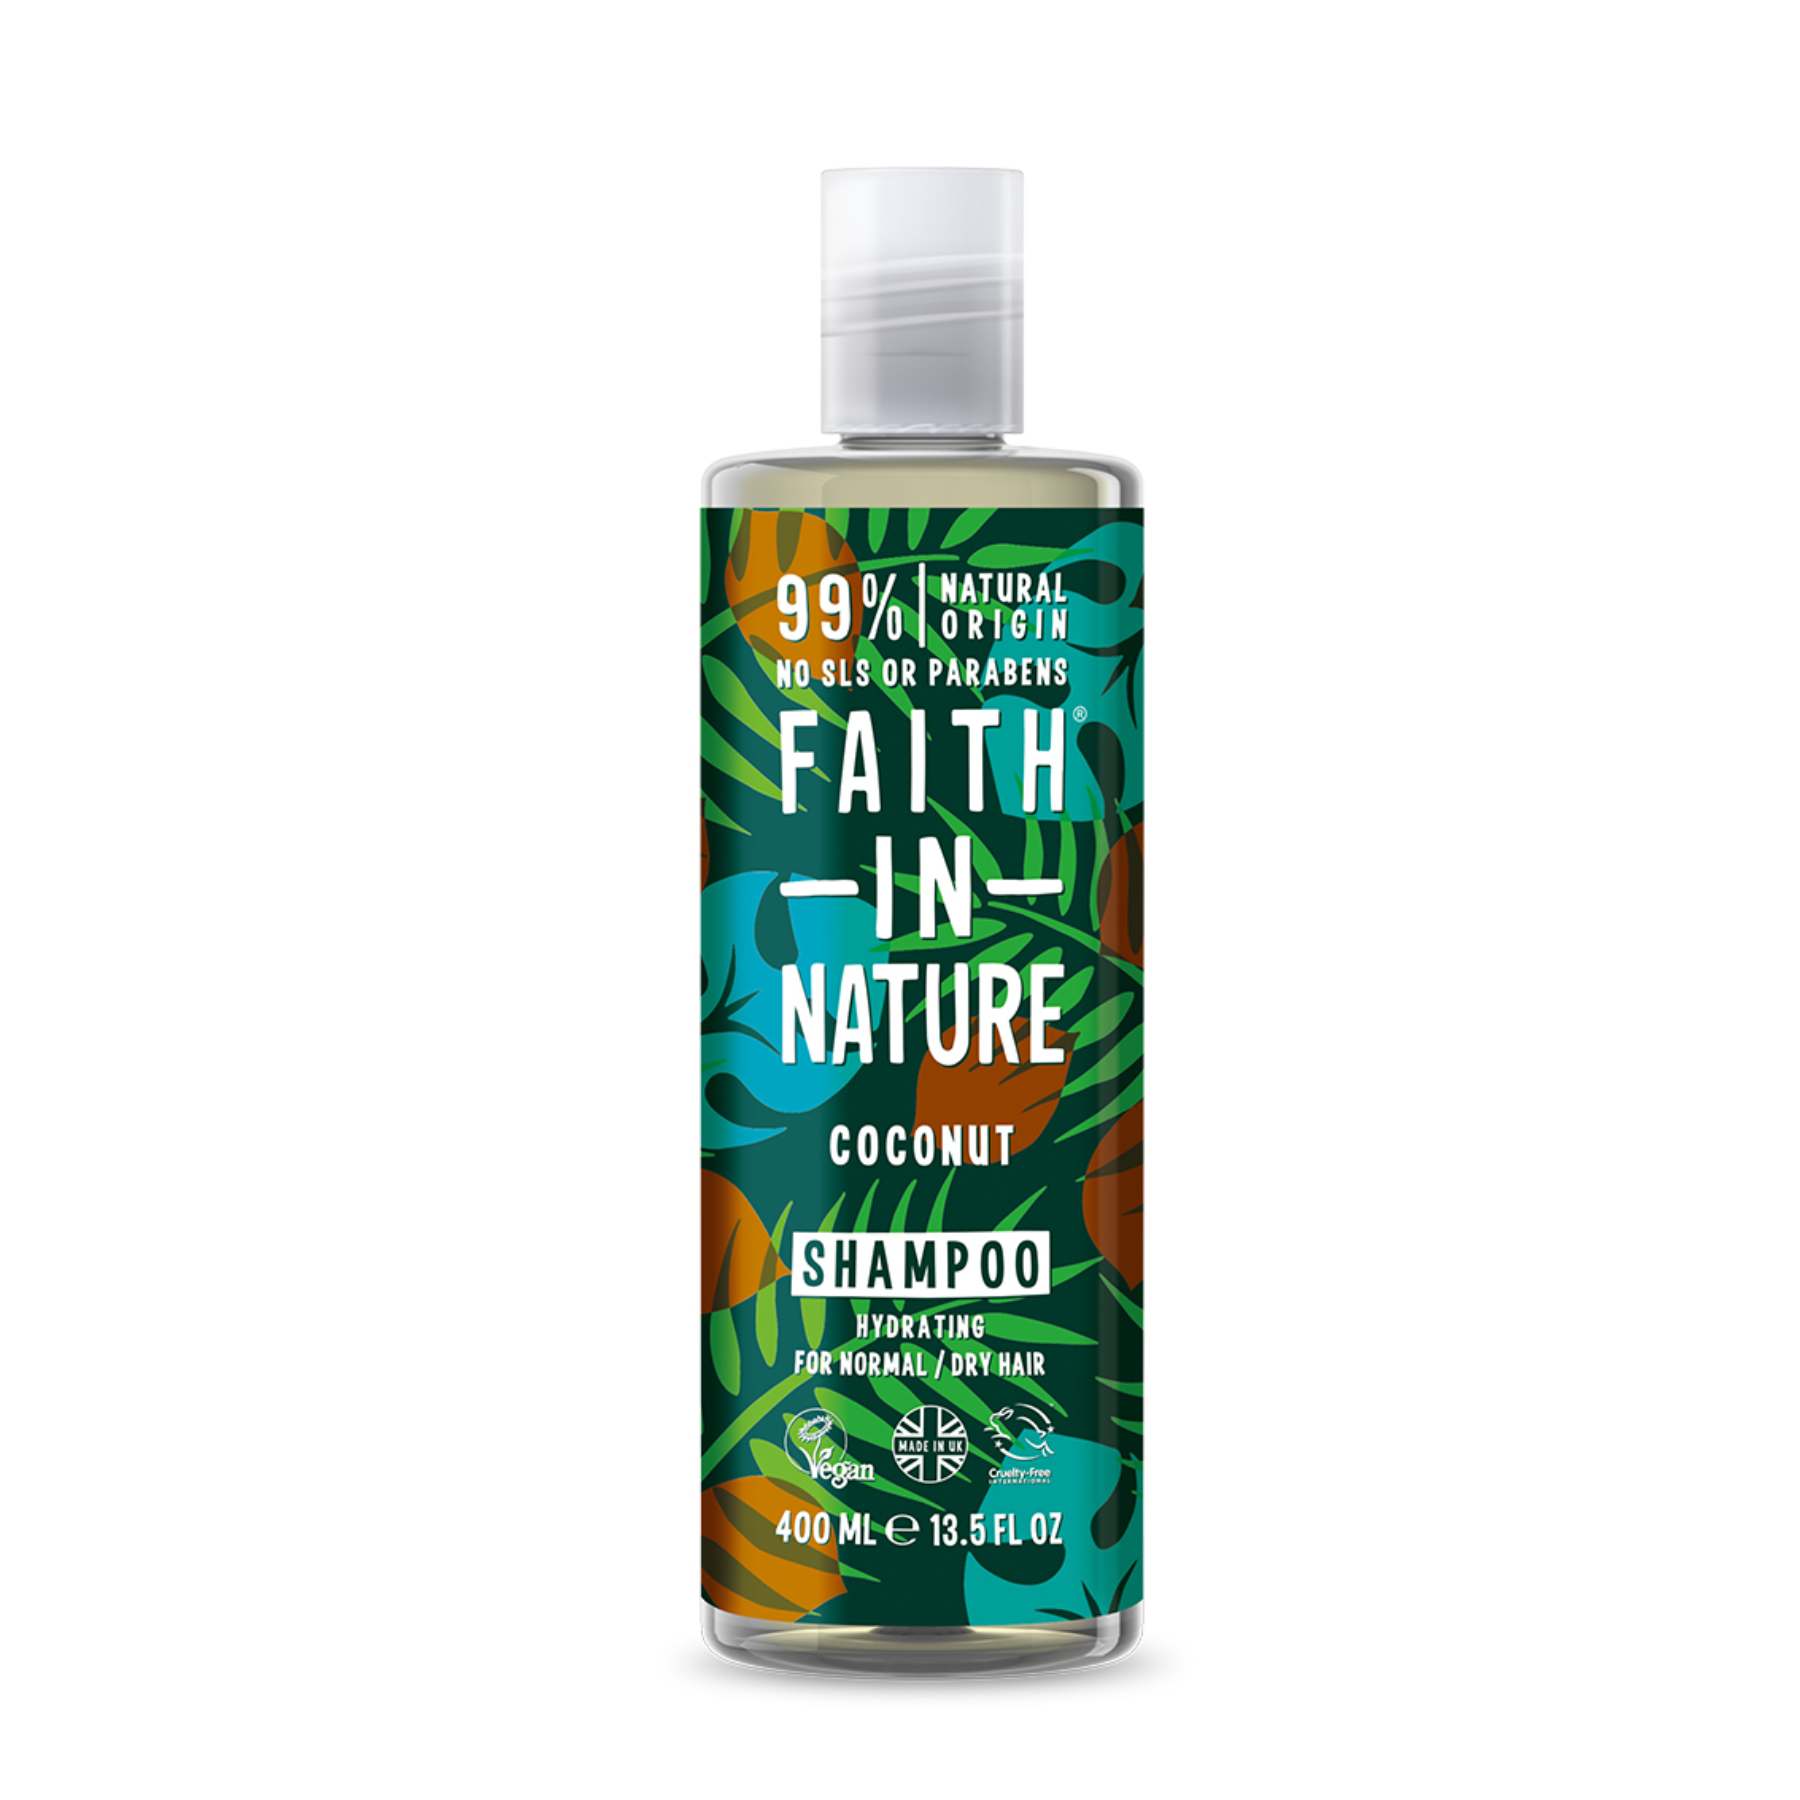 Shop Faith in Nature Coconut Shampoo 400 ml | Hair Damage on Sublime Life. Restorative shampoo to repair hair damage